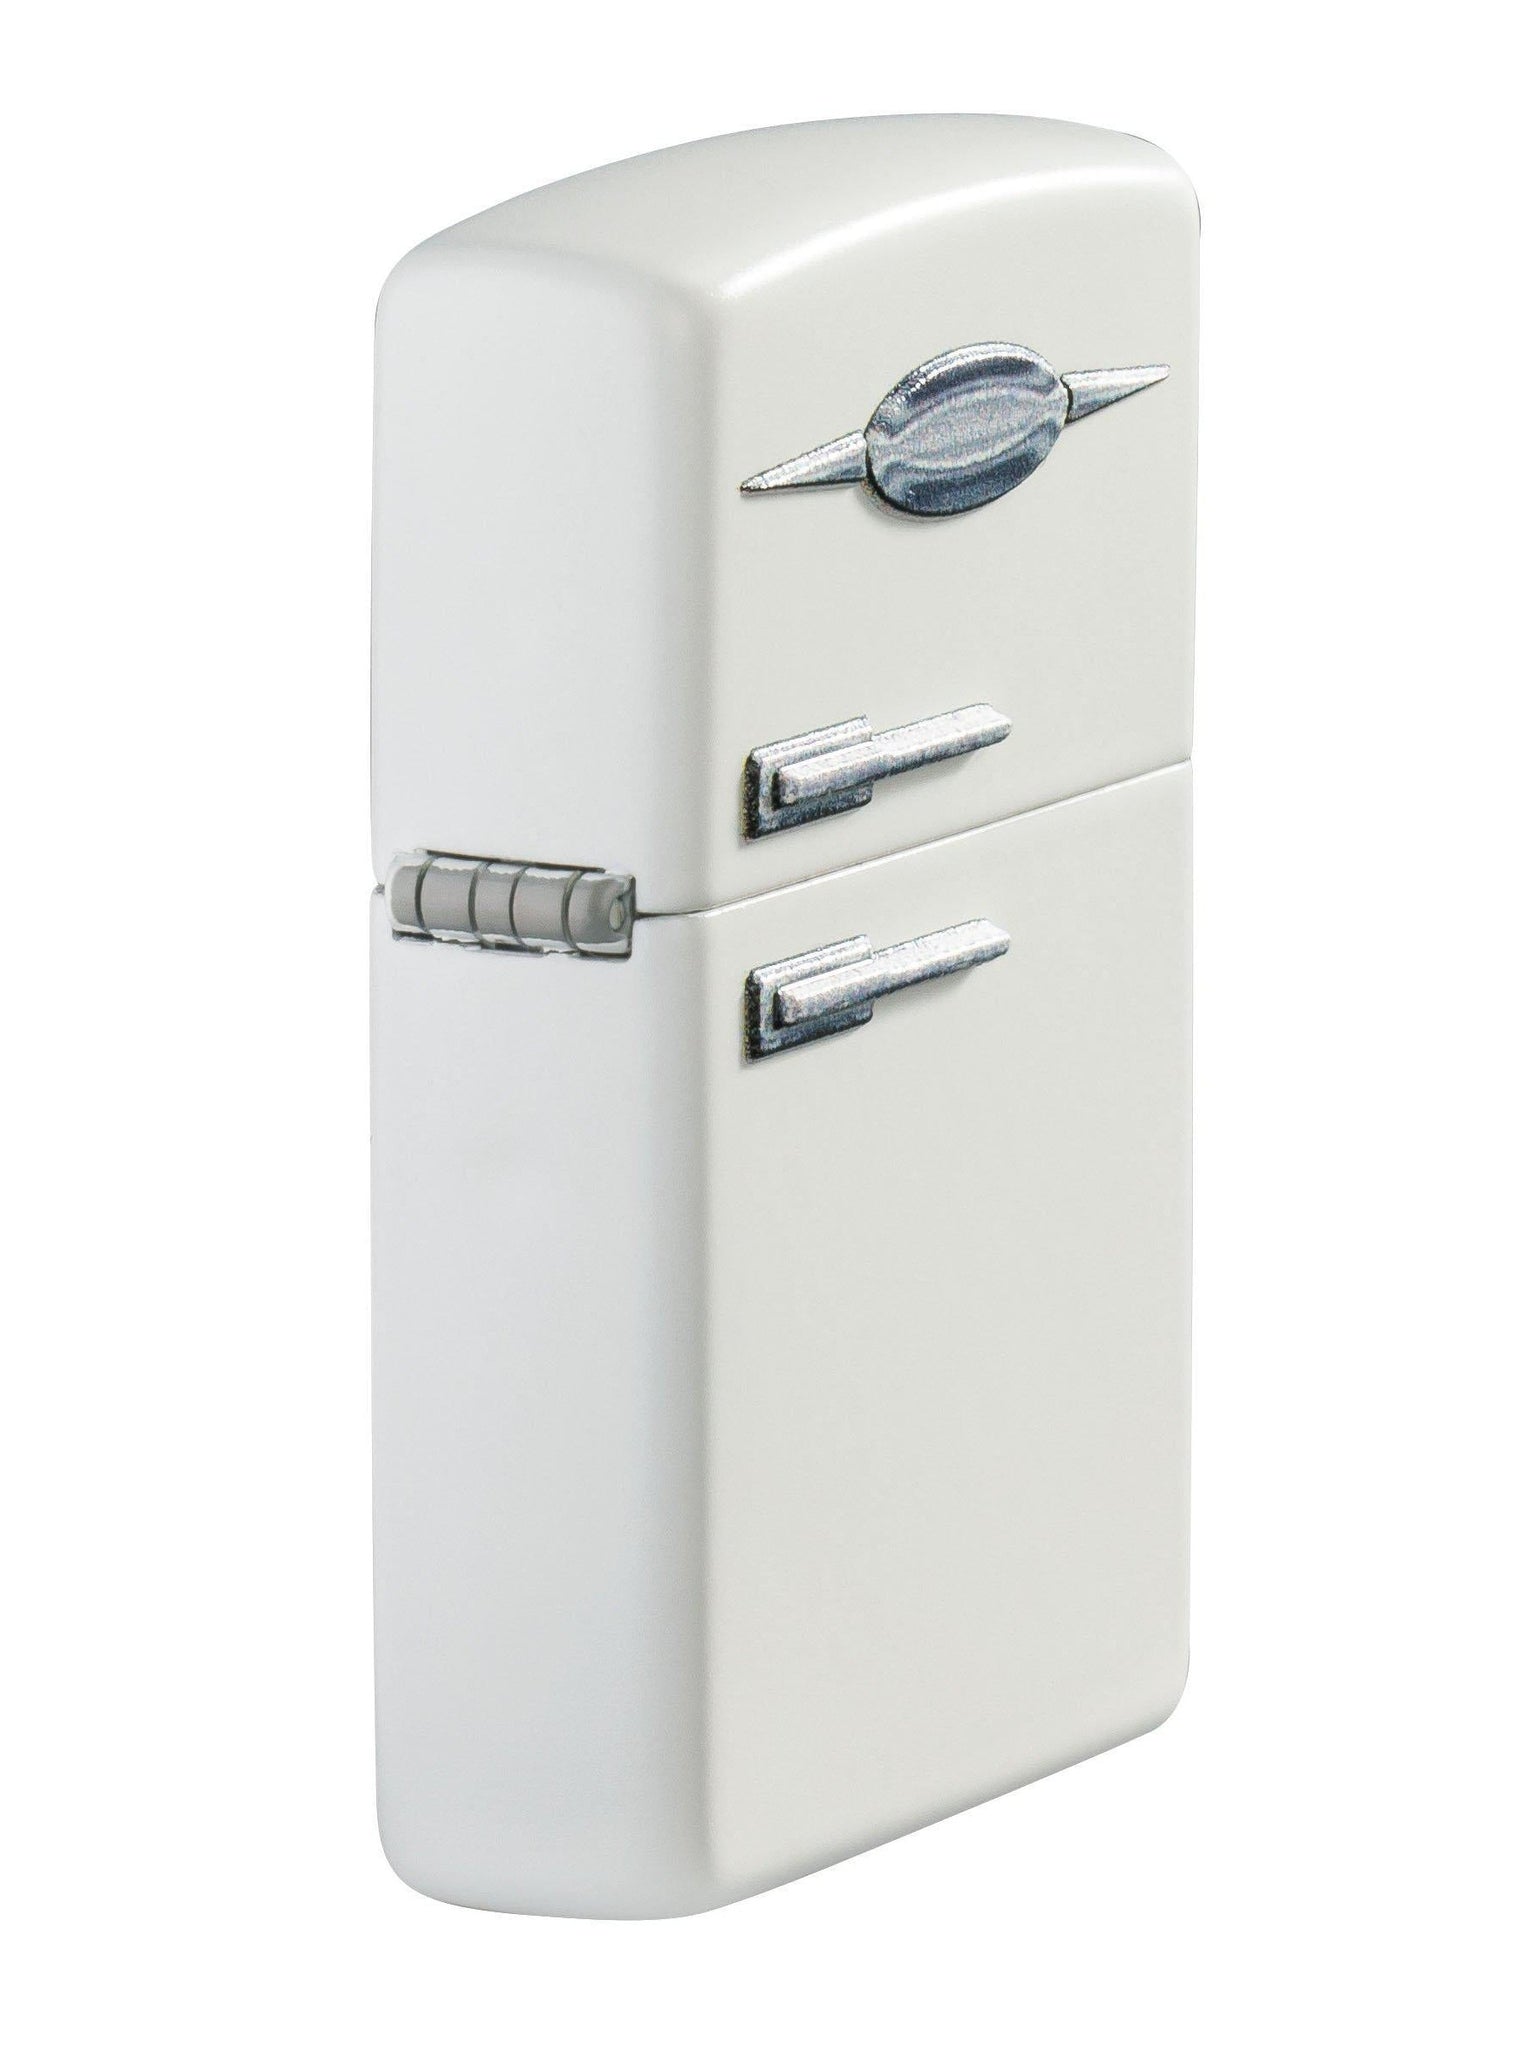 Zippo Lighter: Retro Refrigerator, Texture Print - White Matte 49636